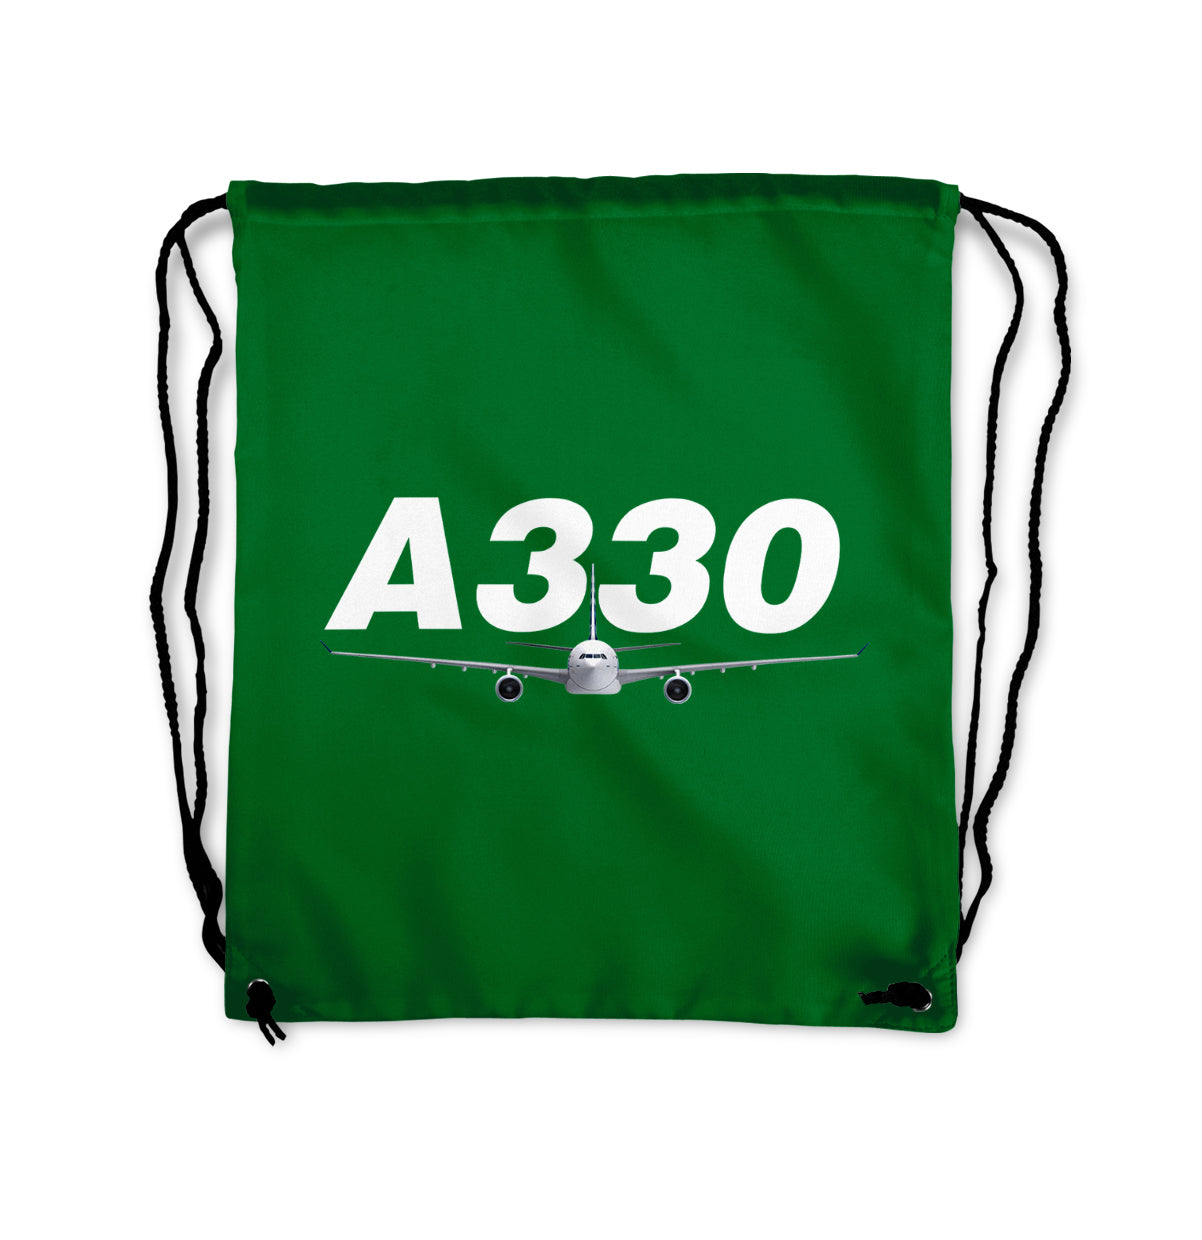 Super Airbus A330 Designed Drawstring Bags